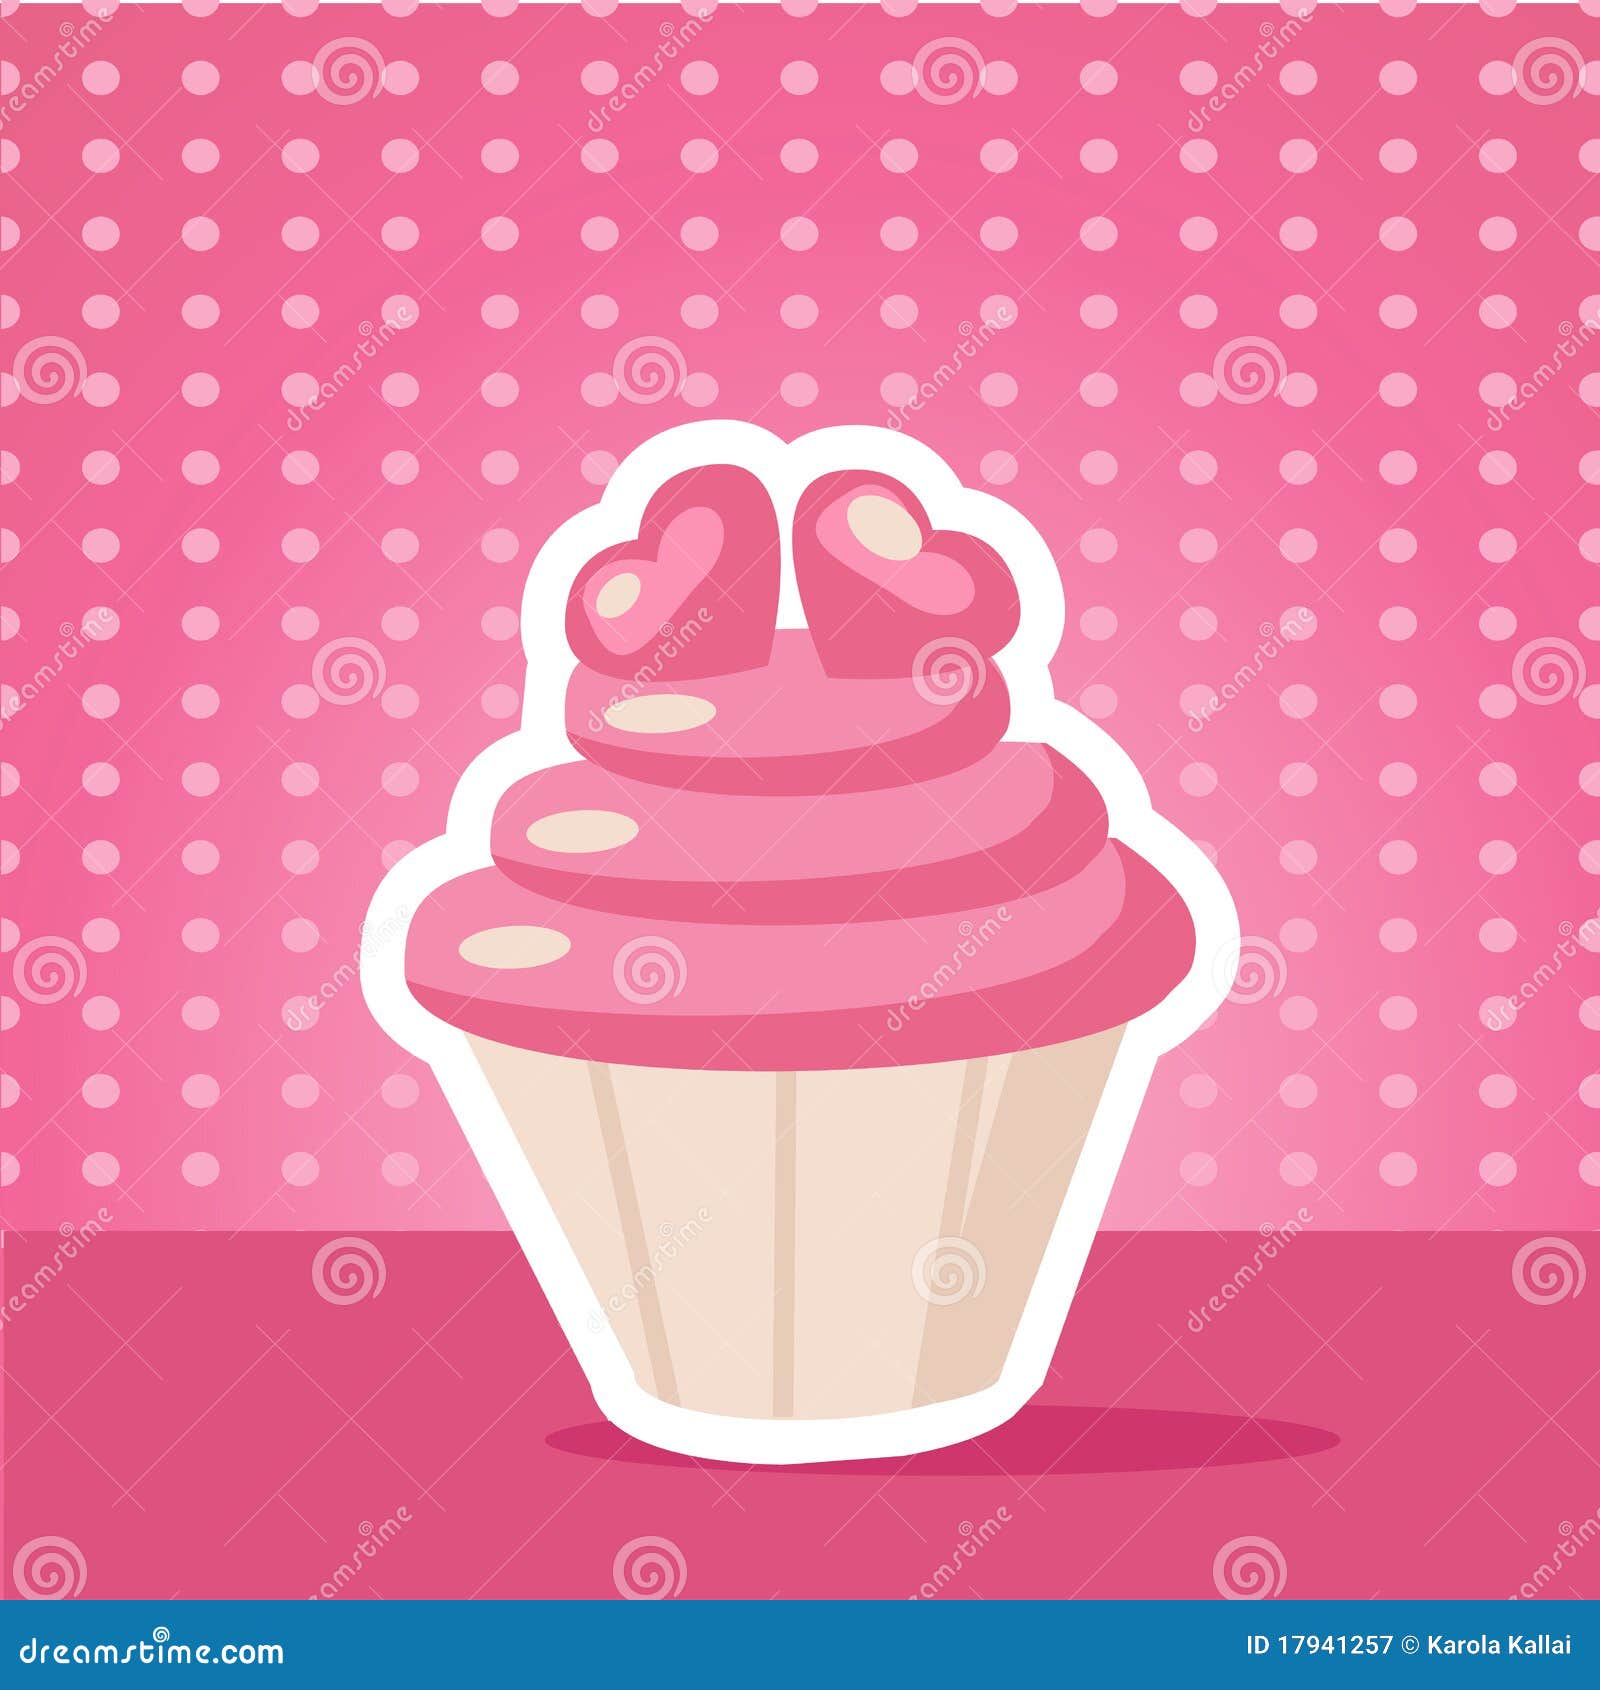 Vintage cupcake background stock vector. Illustration of cake - 17941257